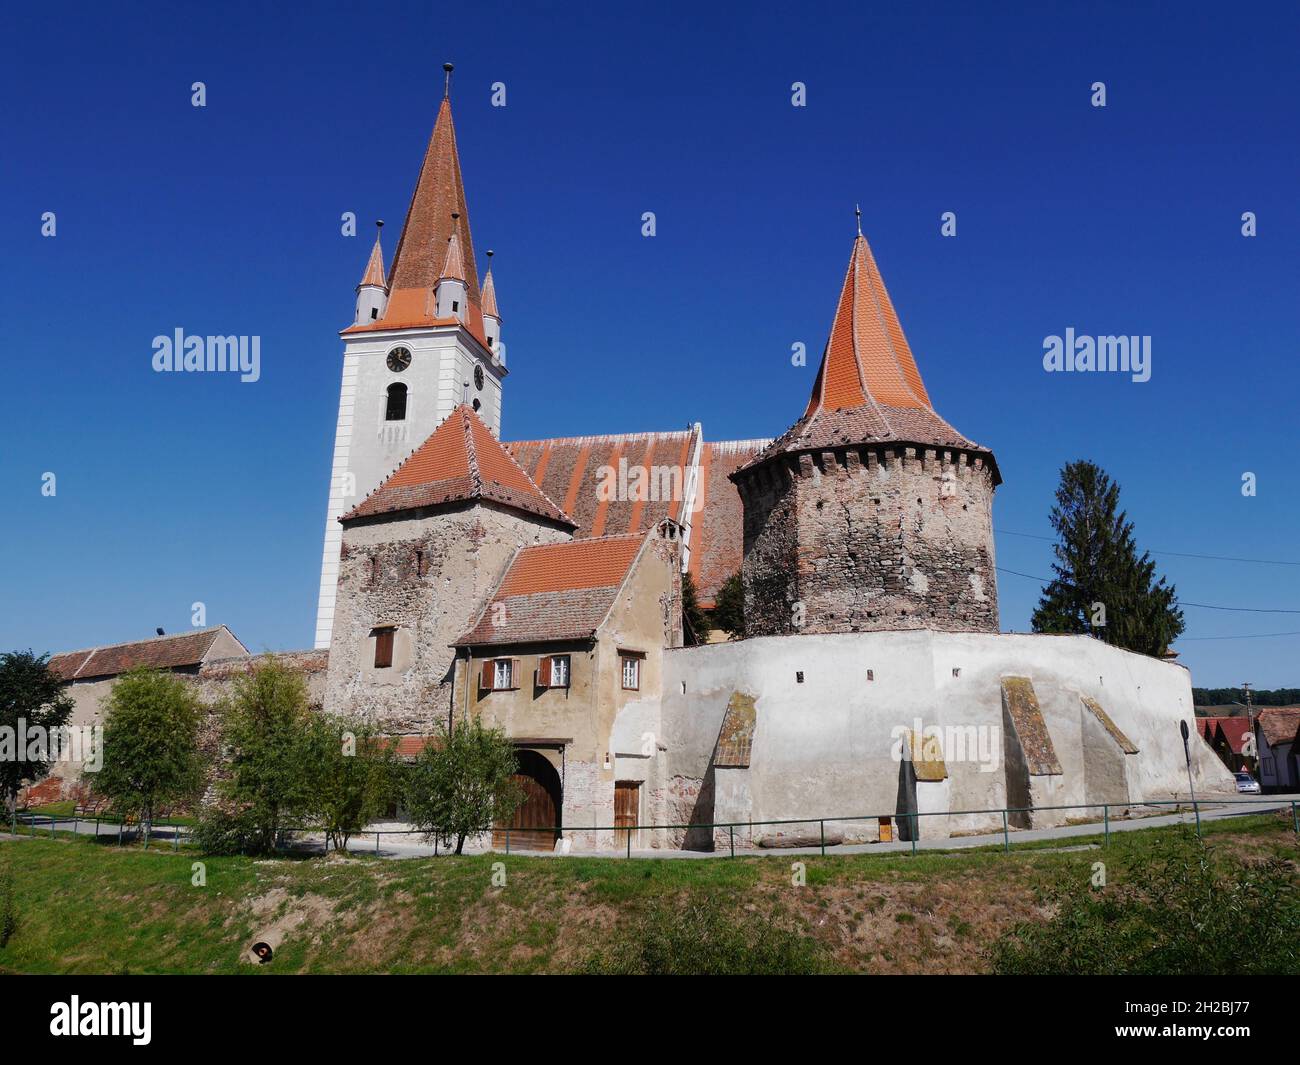 Full view, Cristian fortified church, Transylvania, Romania. High quality photo Stock Photo